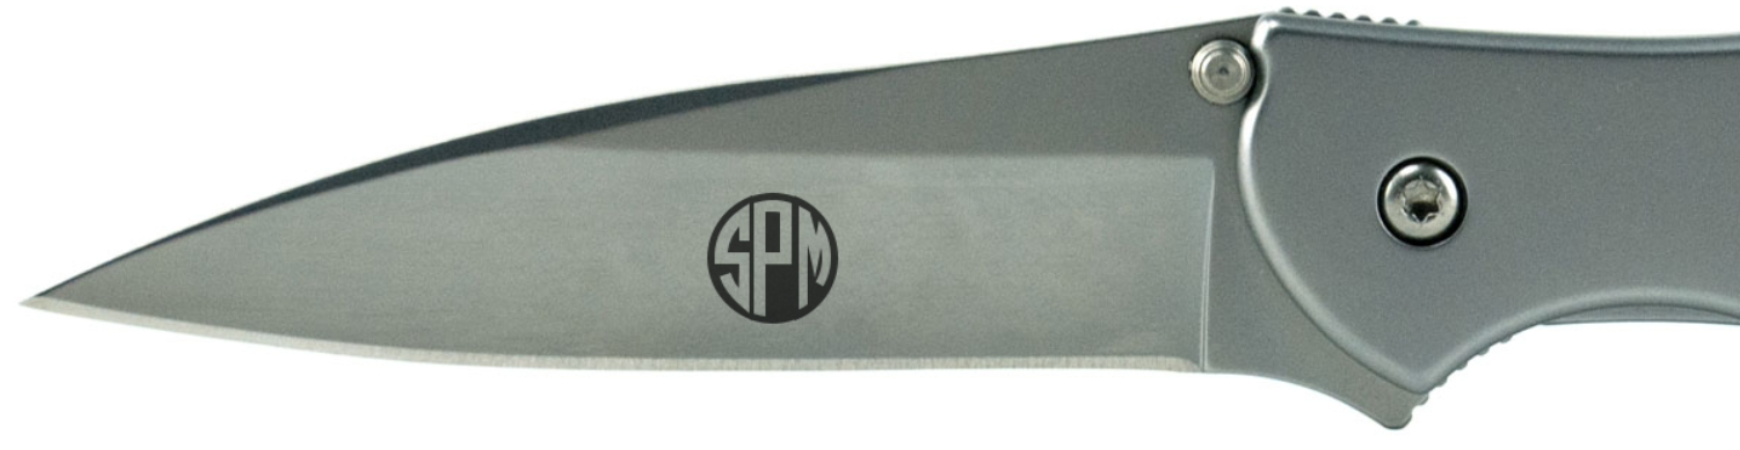 Monogram Engraved Knives